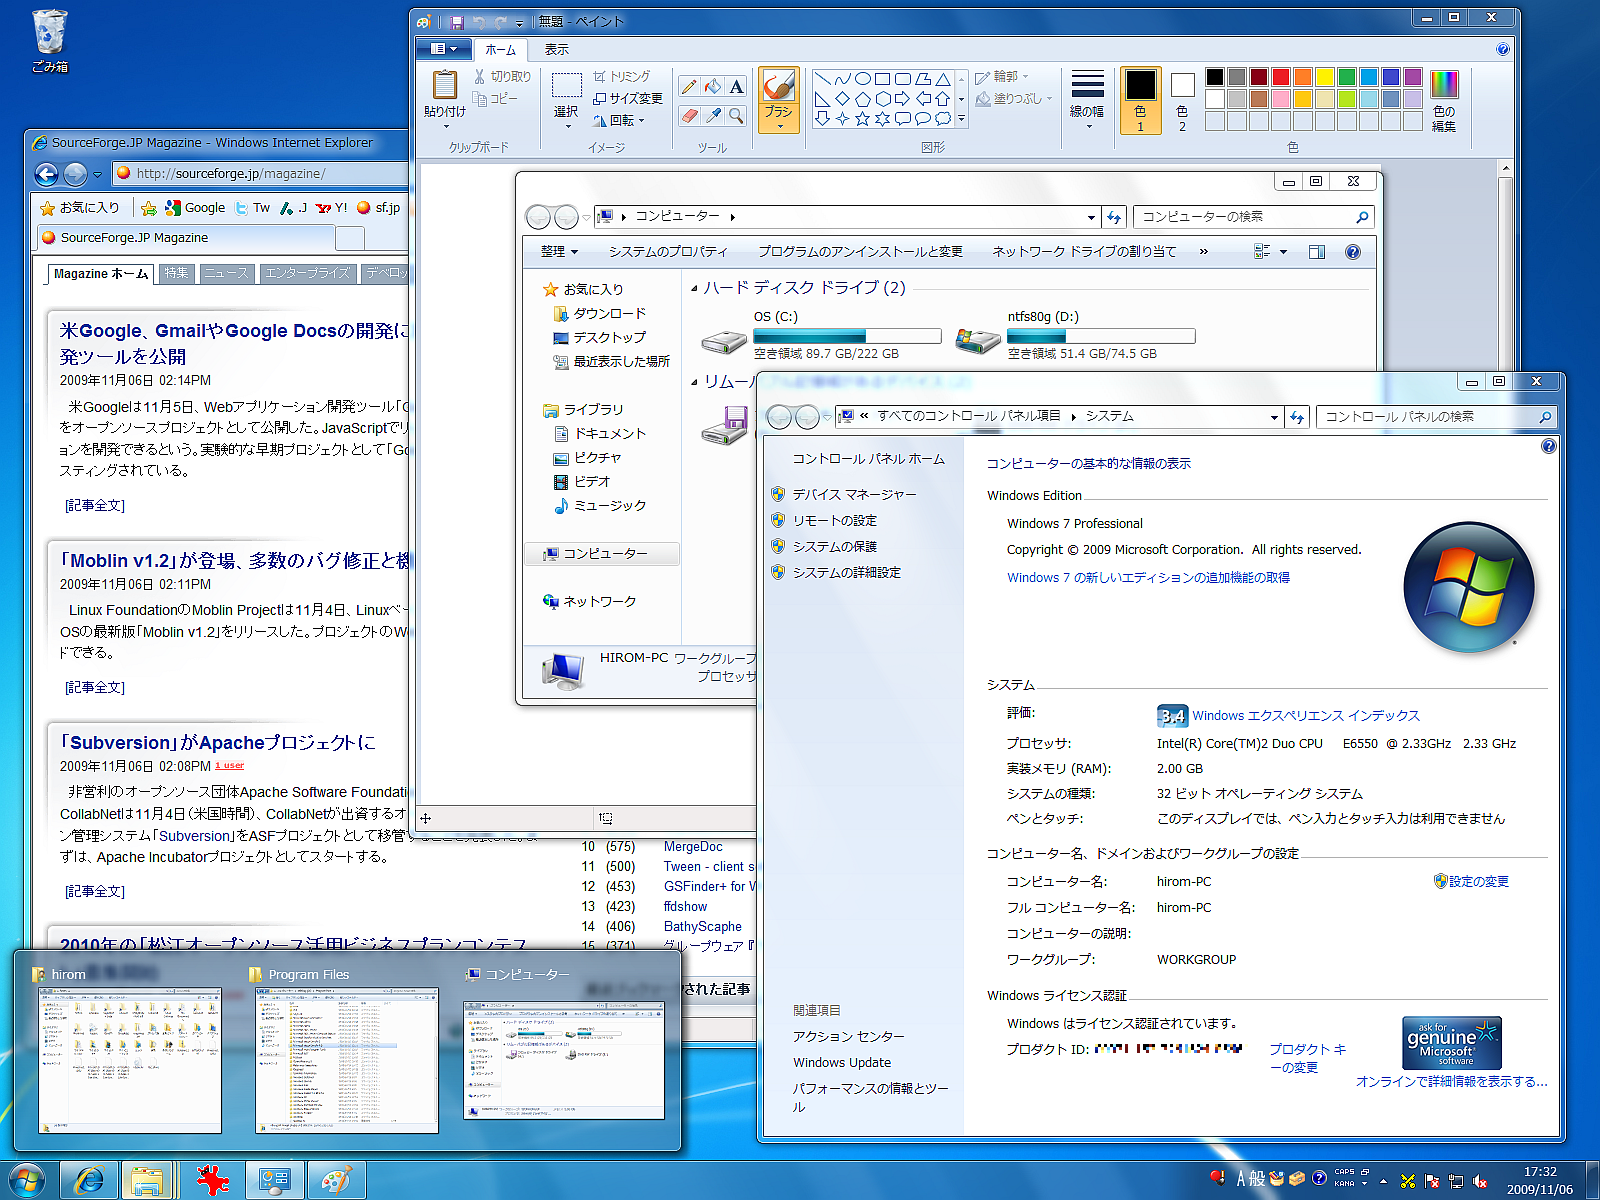 Windows7 Professional 32ビット 製品版一式